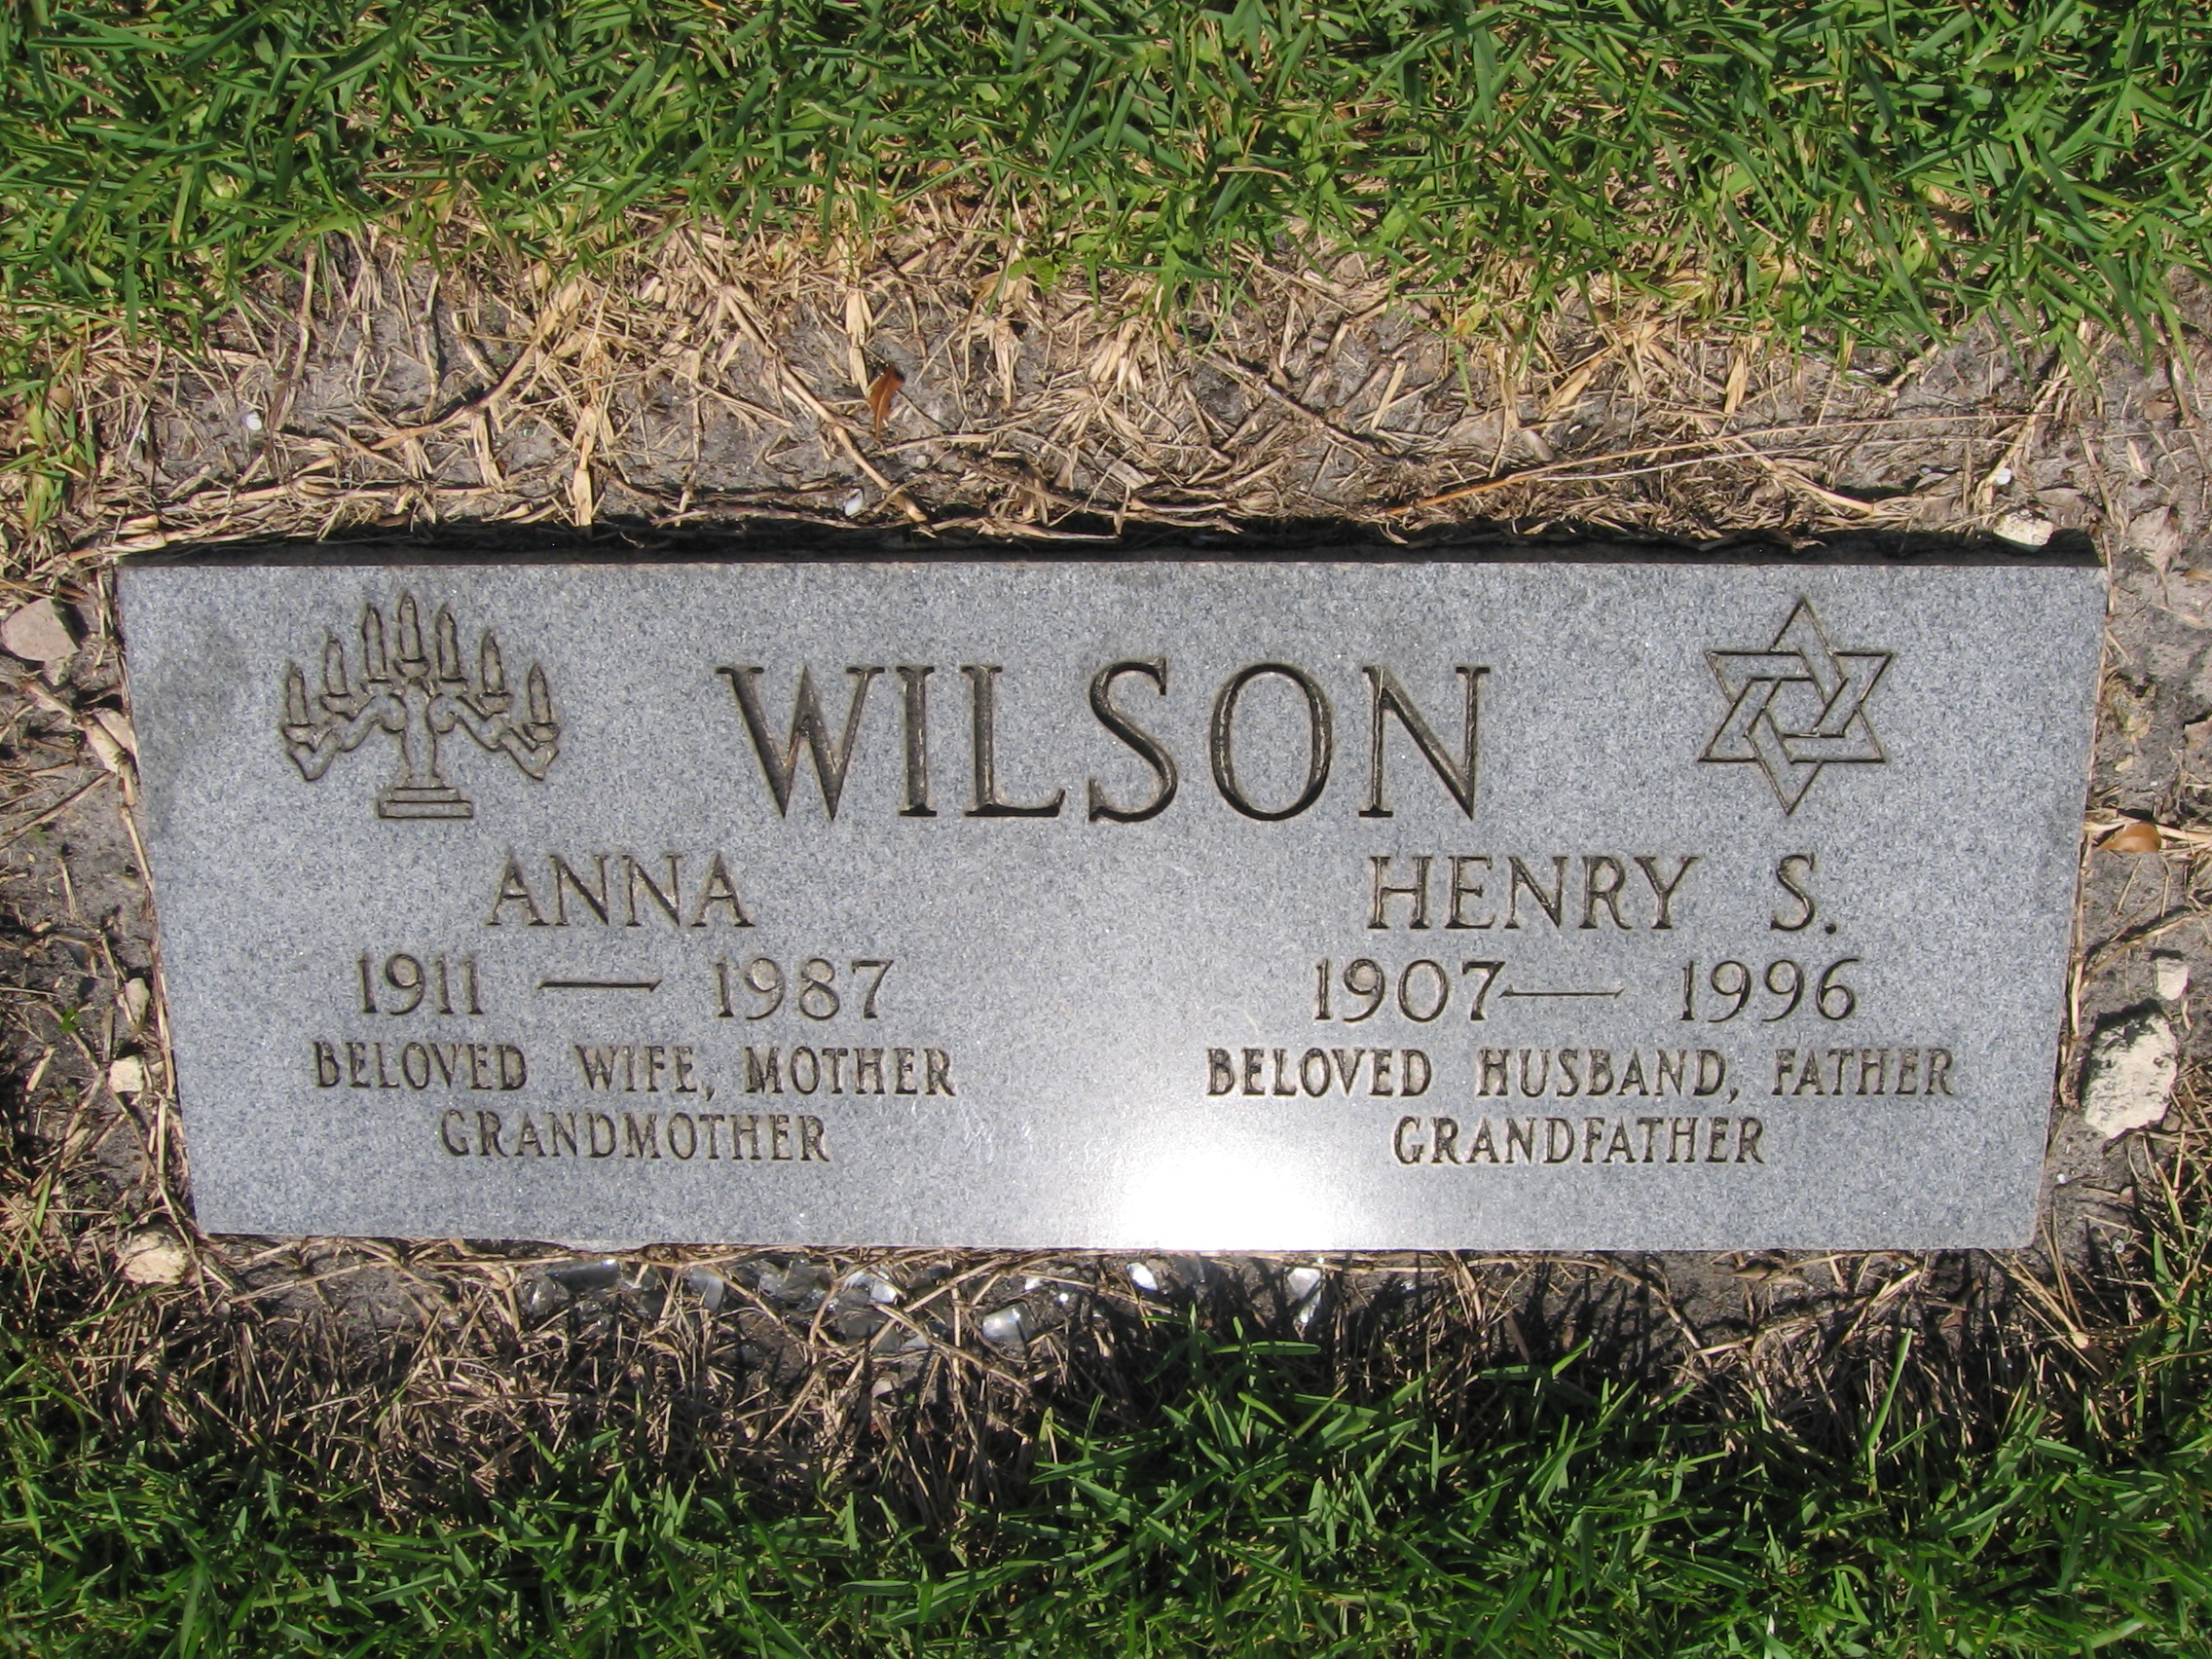 Henry S Wilson